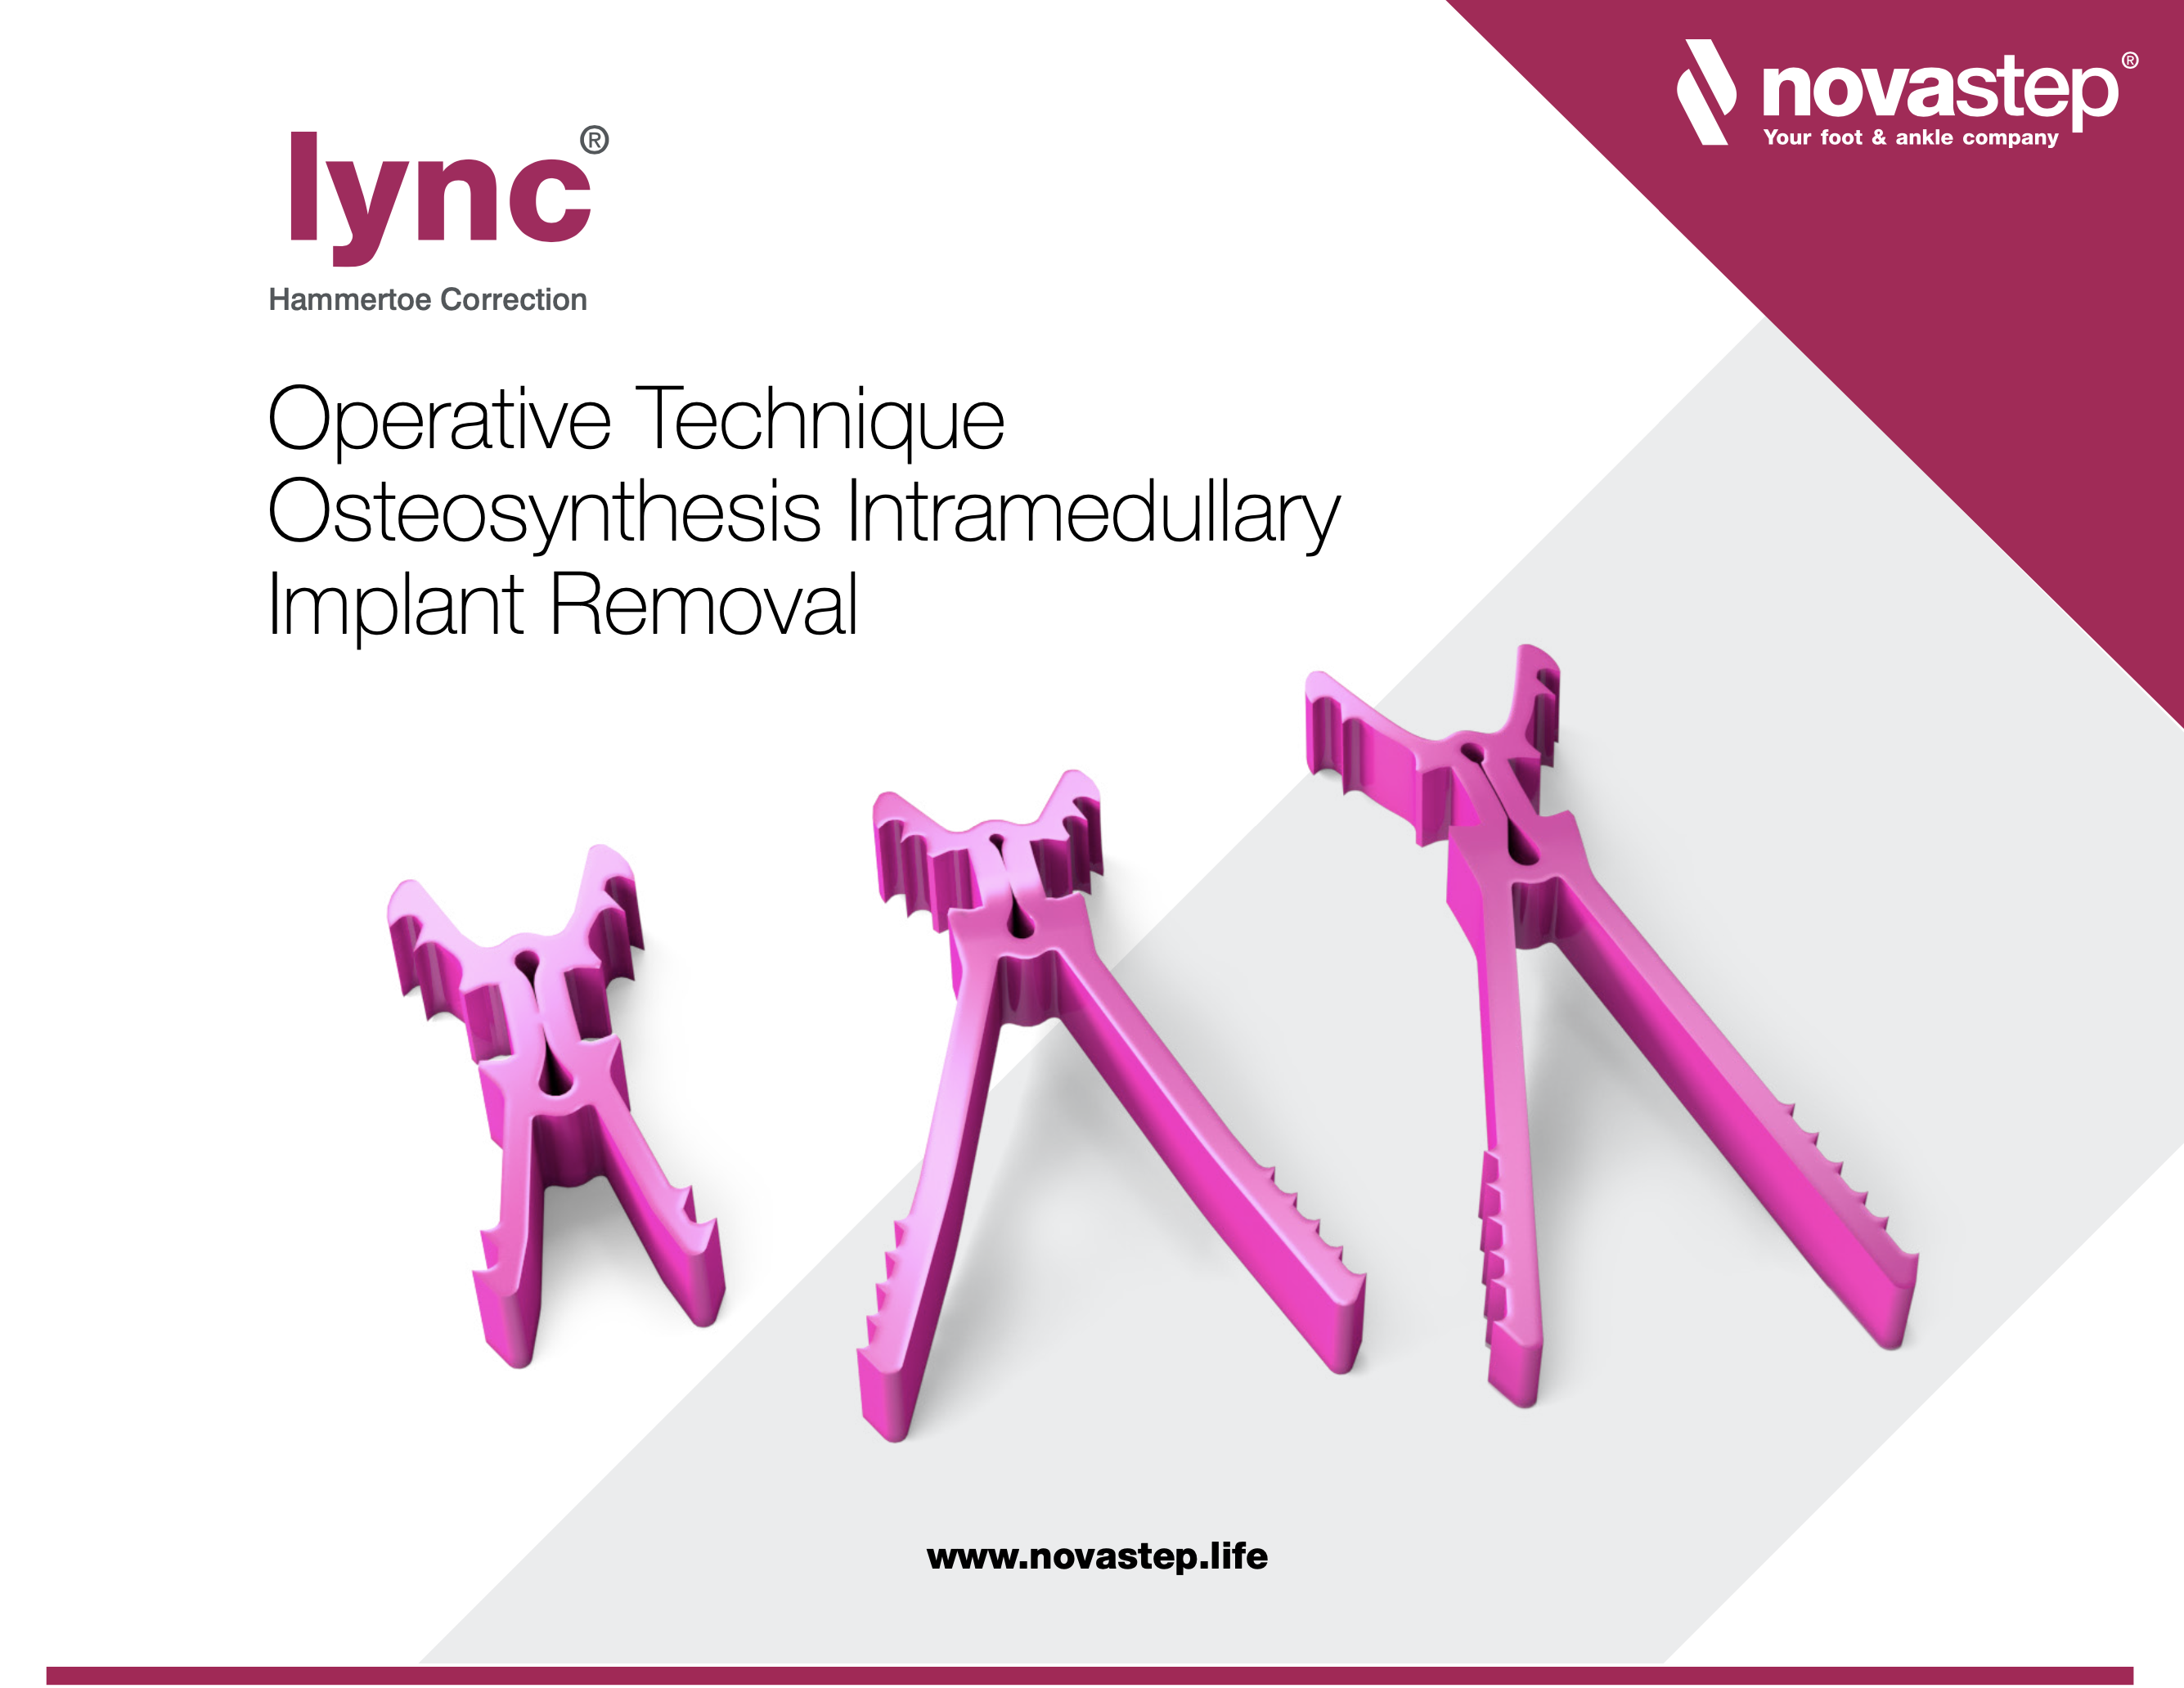 Lync Implant Removal Operative Technique